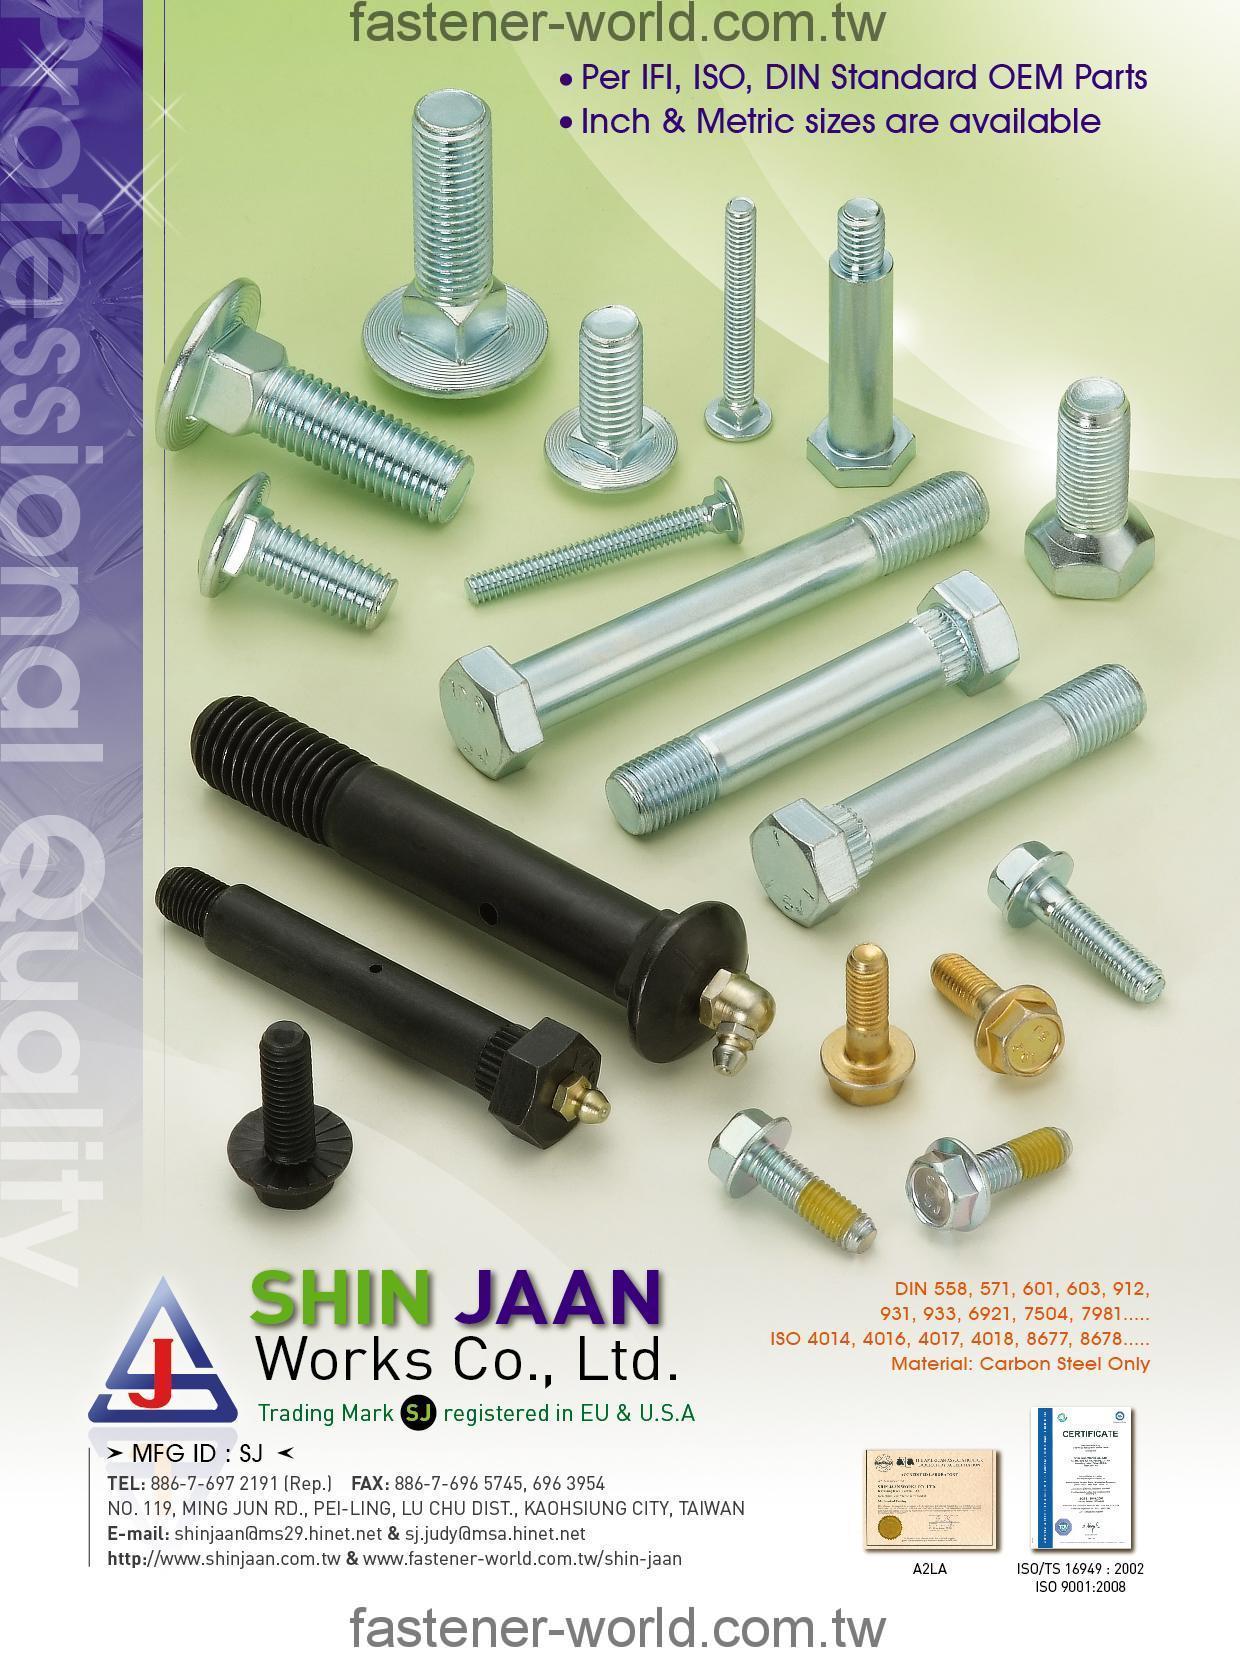 SHIN JAAN WORKS CO., LTD.  Online Catalogues